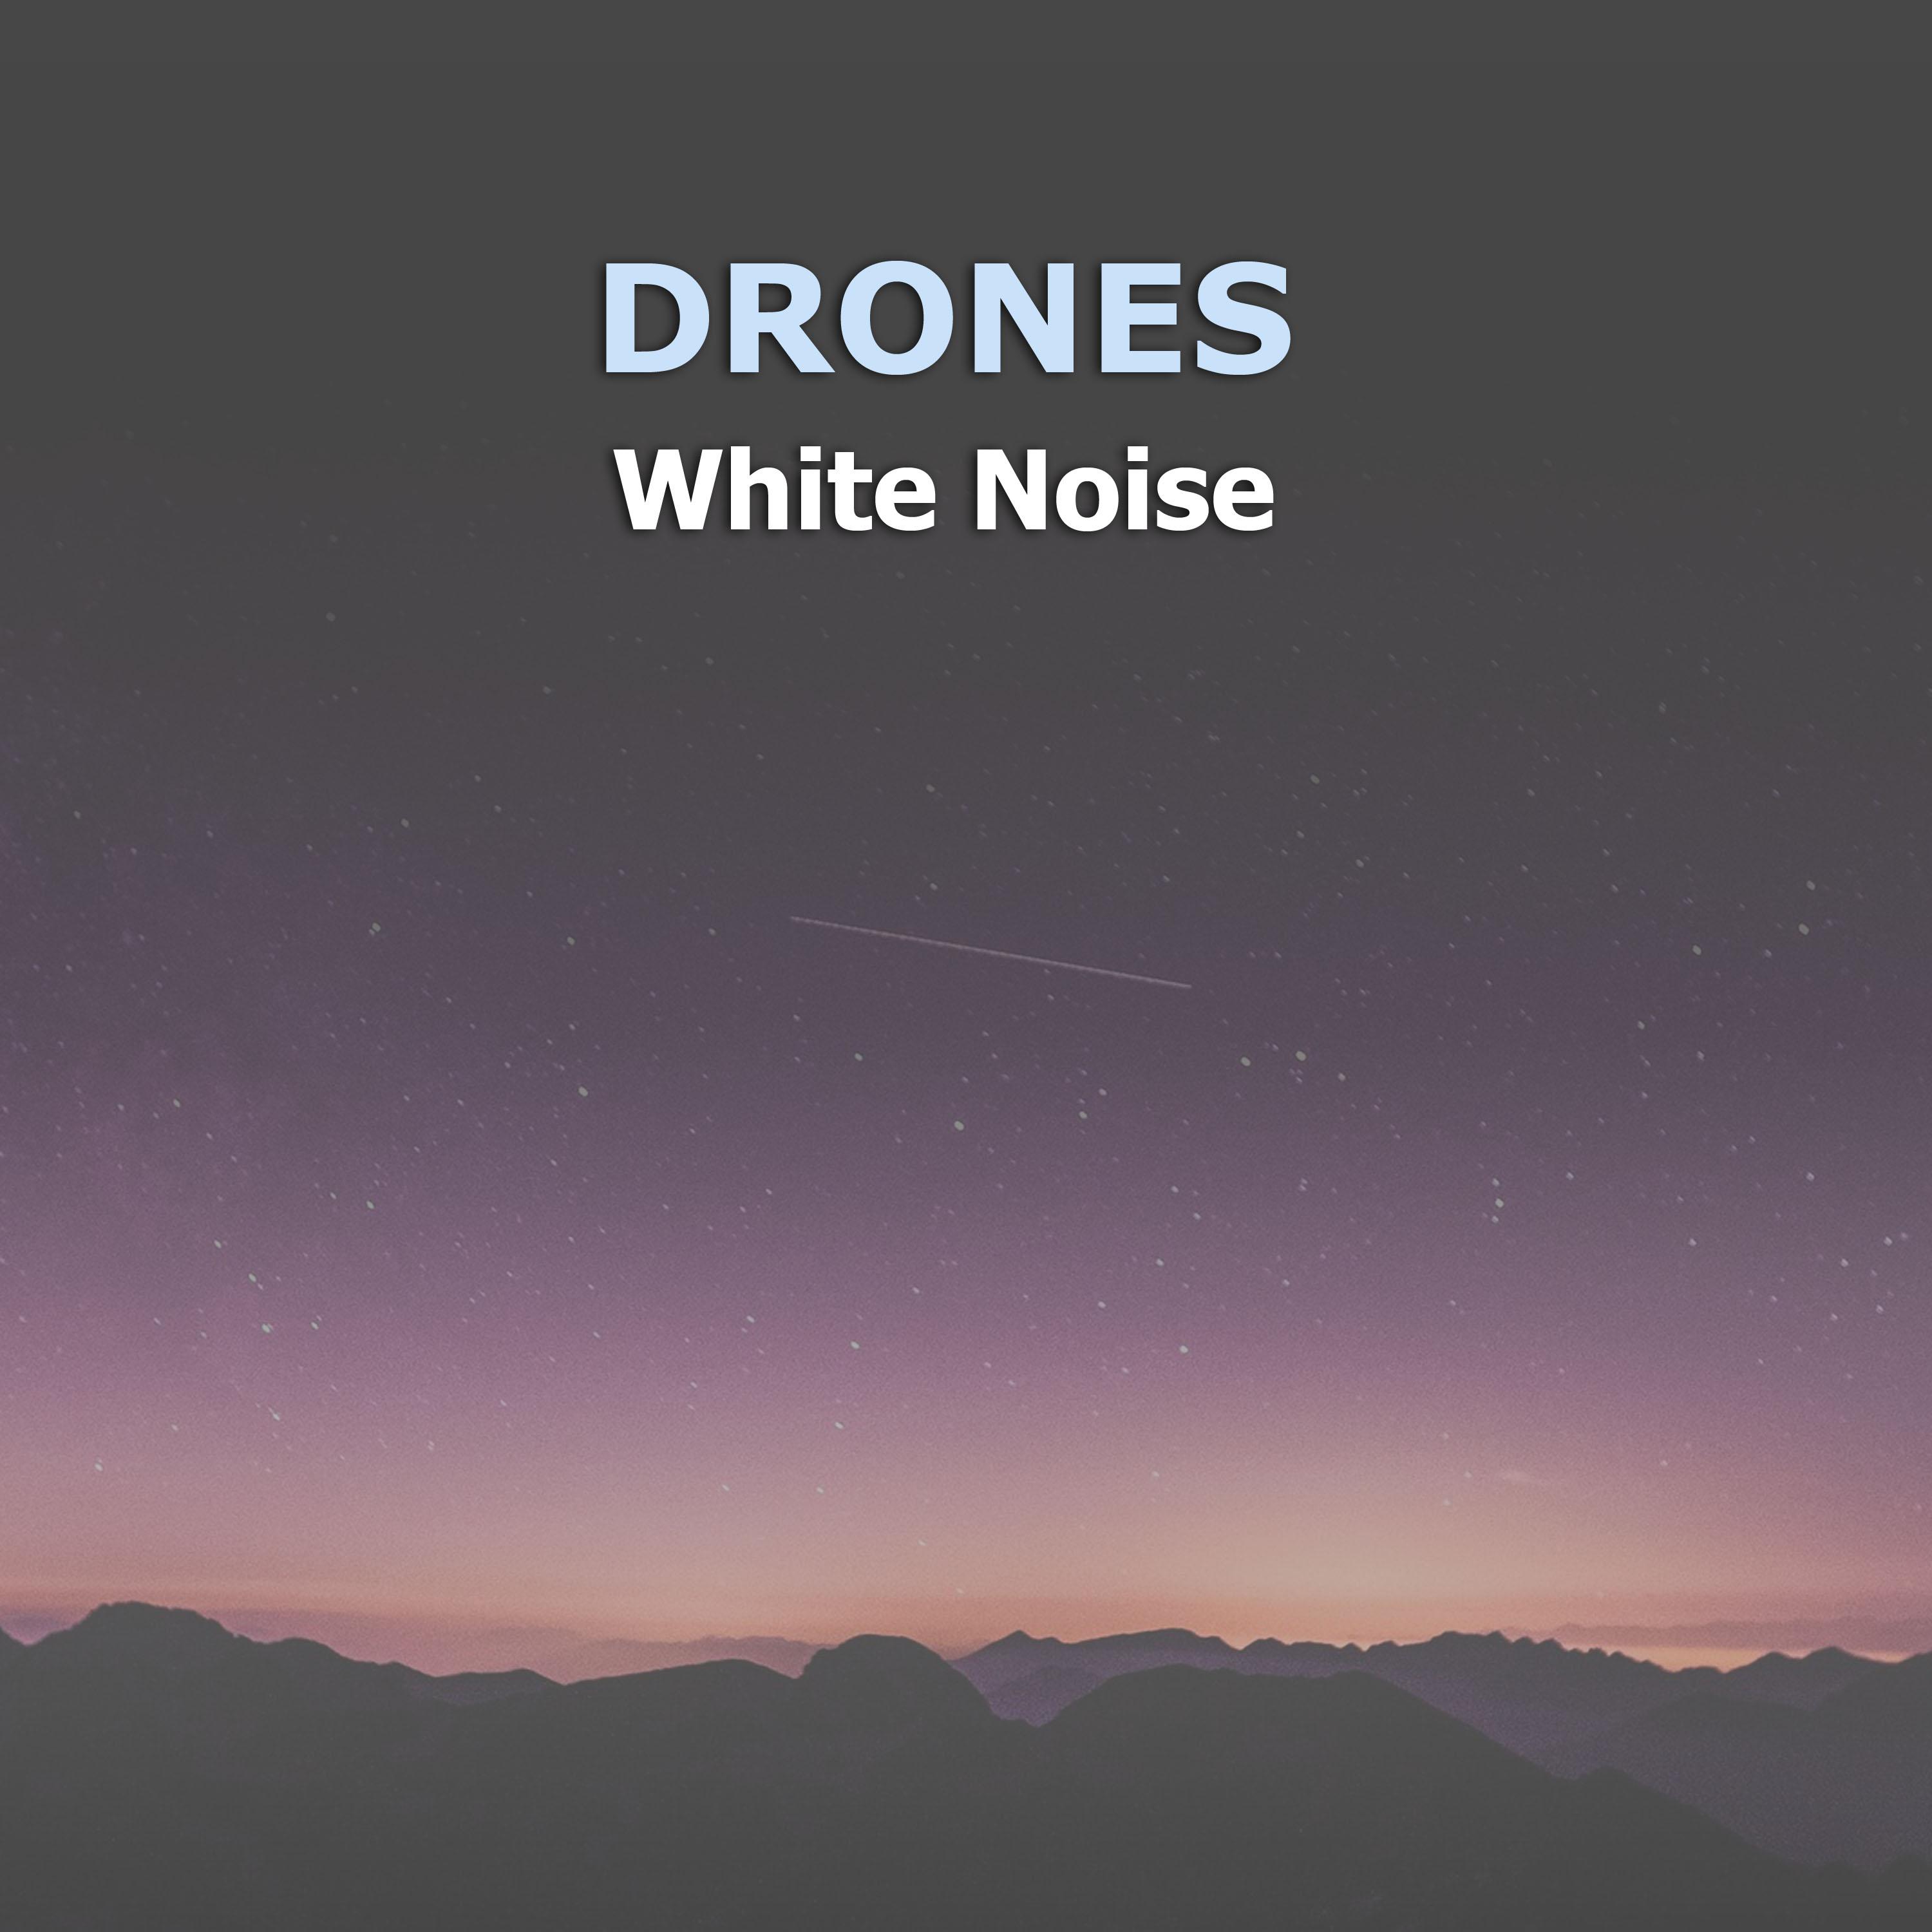 10 White Noise Drones